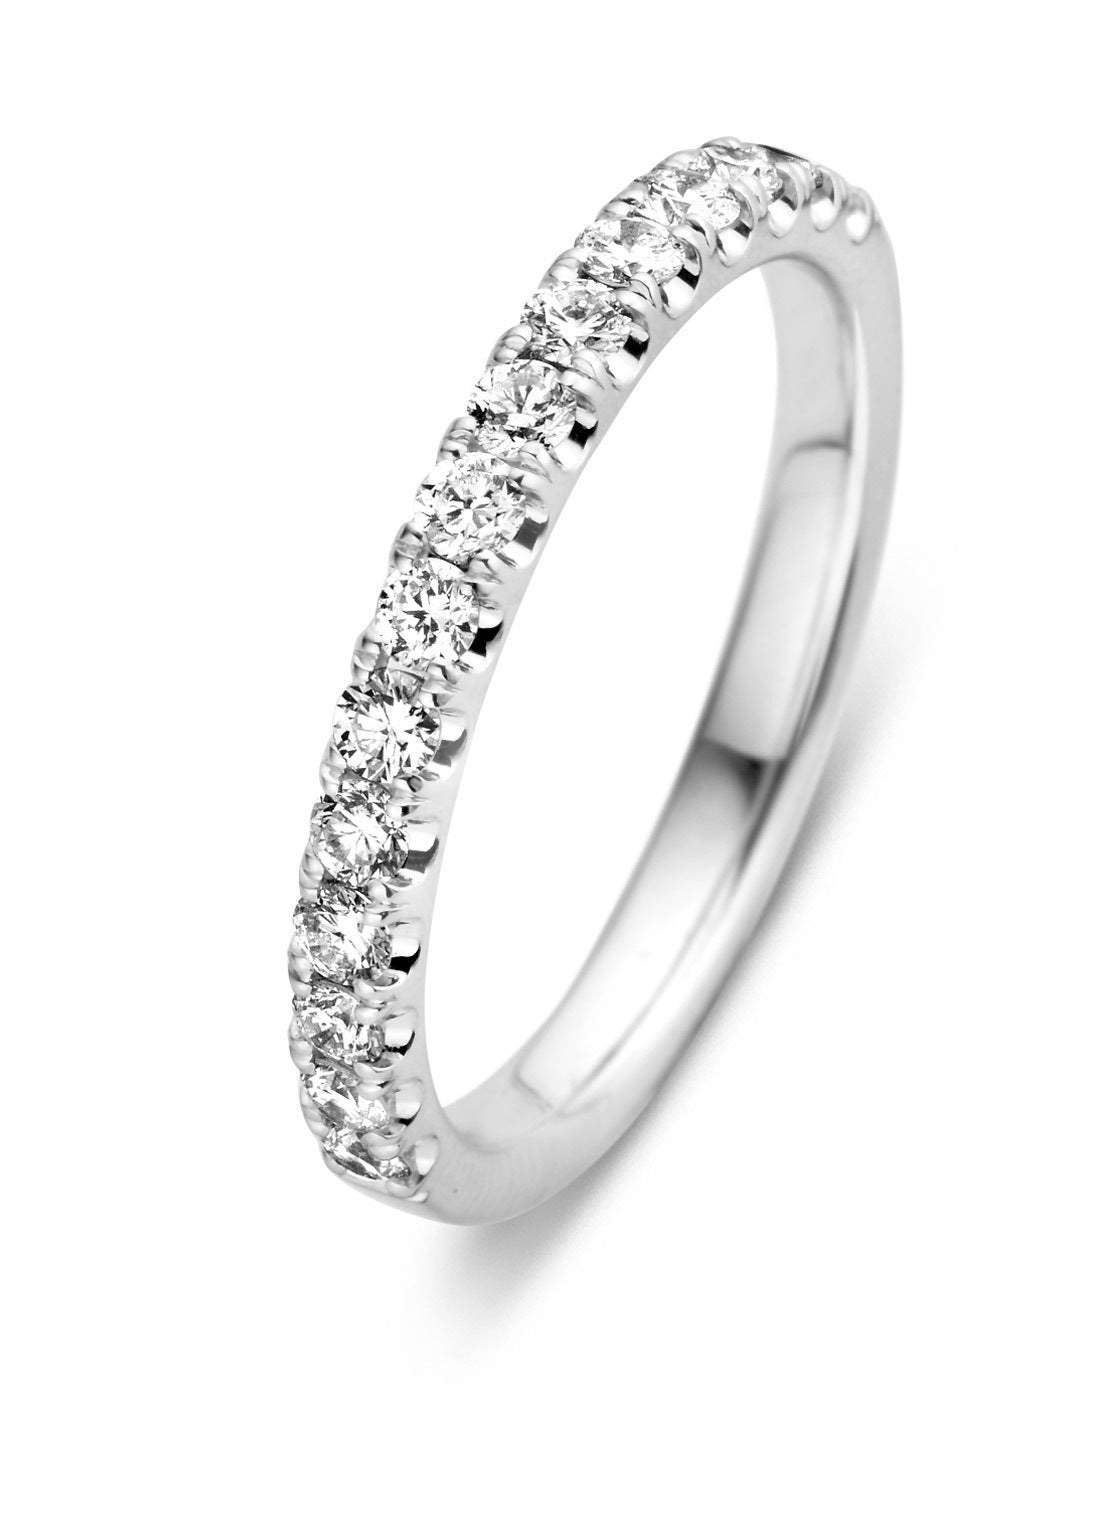 White gold ring, 0.46 ct diamond, wedding